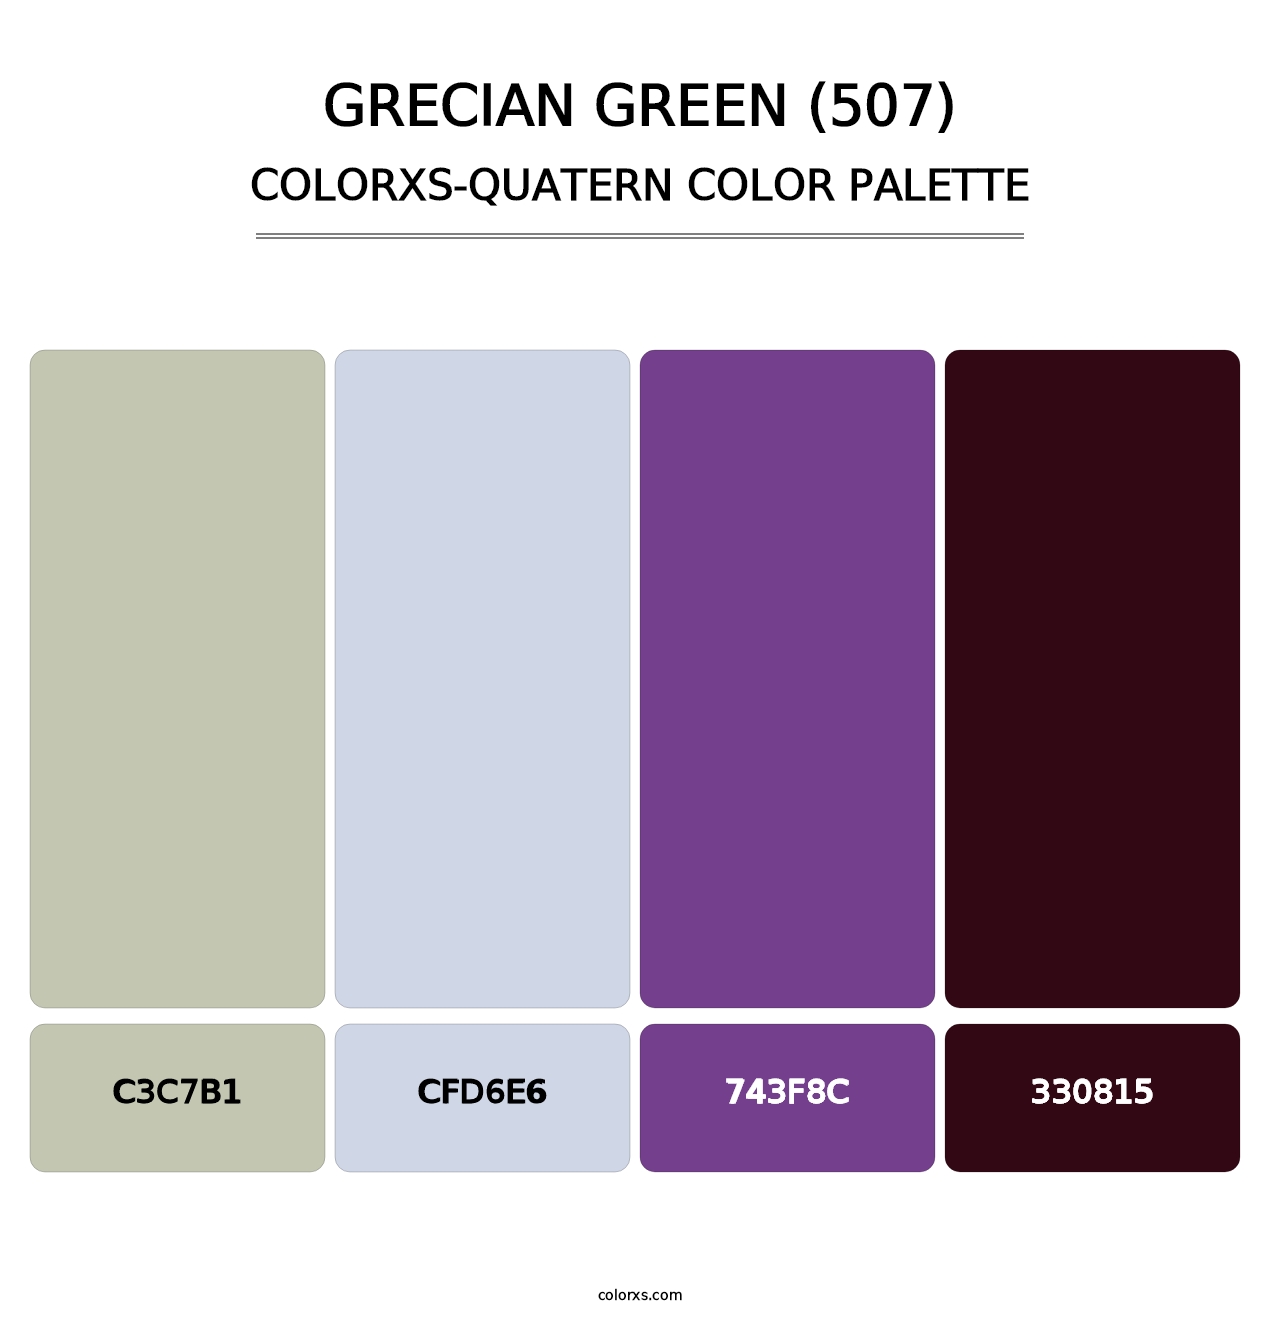 Grecian Green (507) - Colorxs Quatern Palette